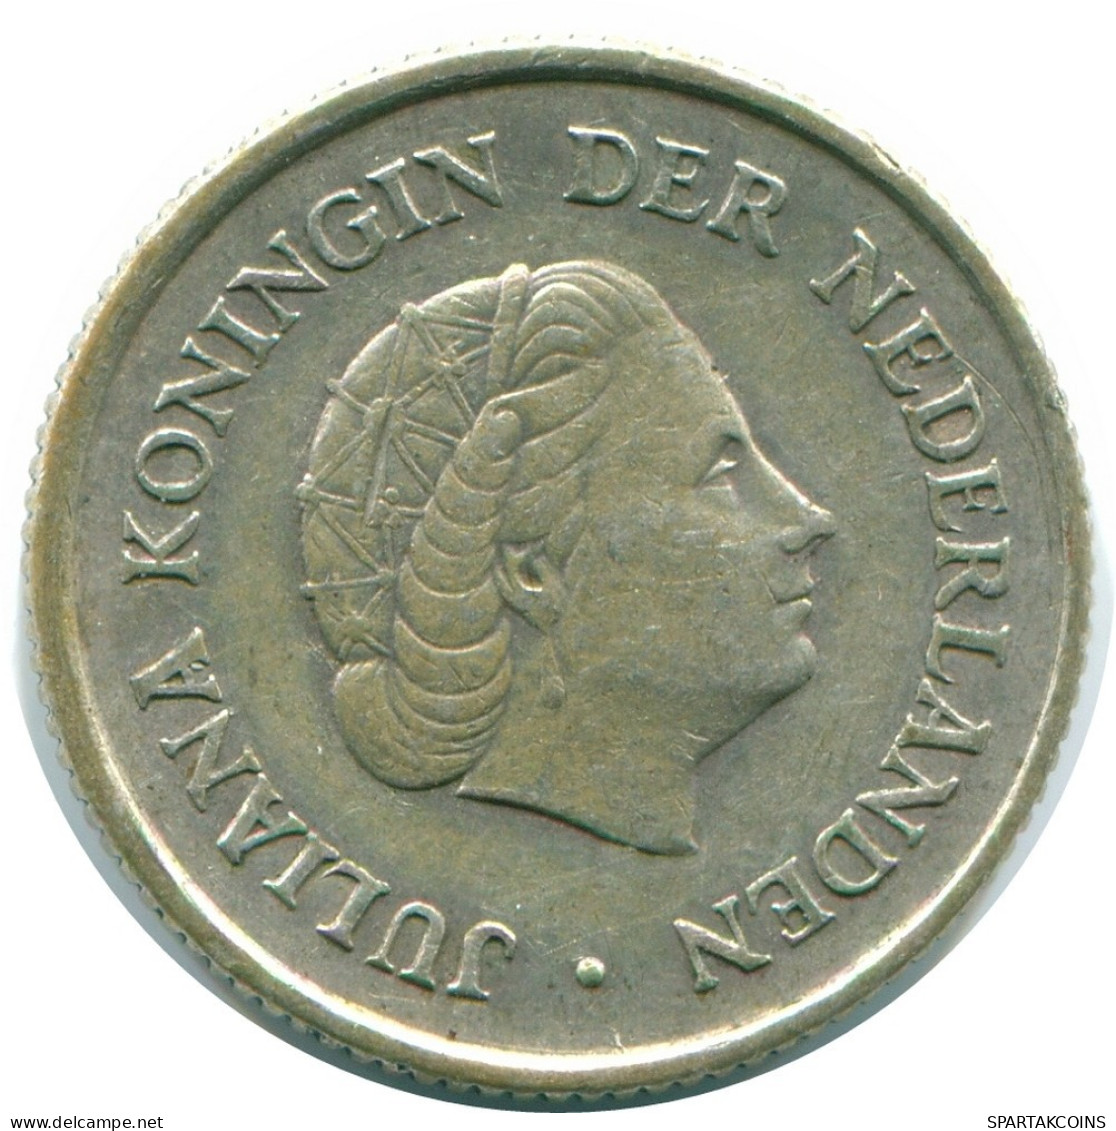 1/4 GULDEN 1967 NETHERLANDS ANTILLES SILVER Colonial Coin #NL11524.4.U.A - Niederländische Antillen